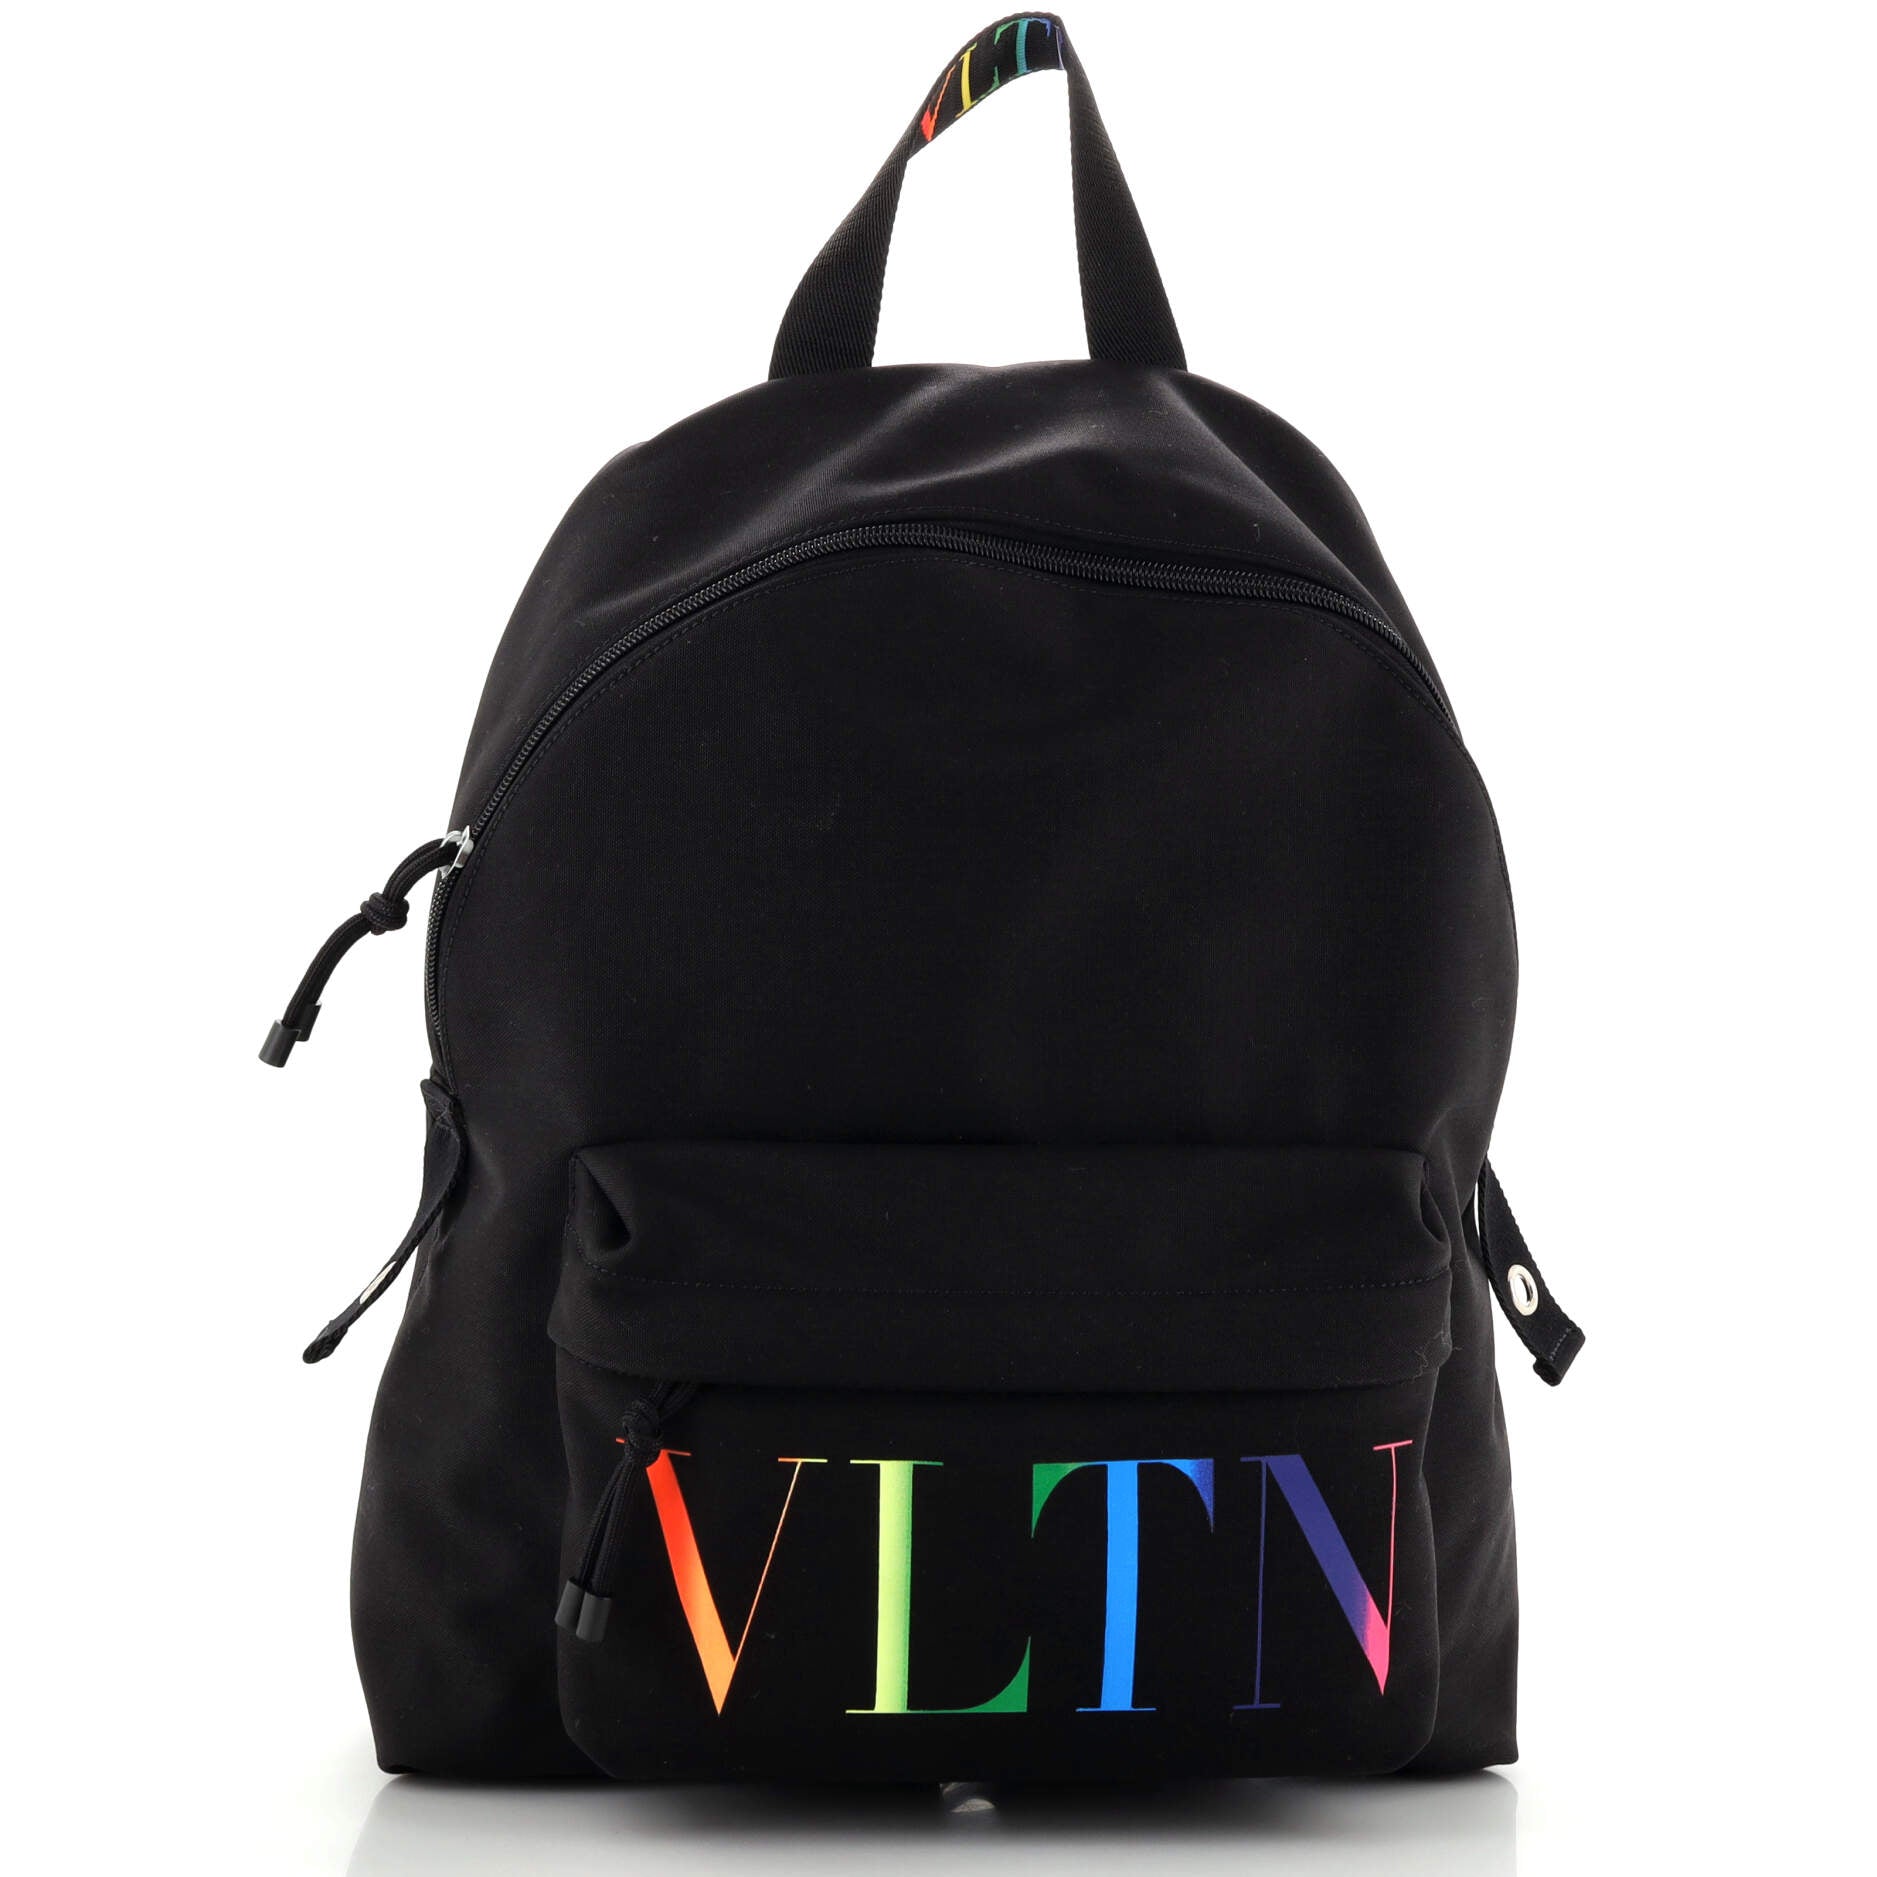 VLTN Backpack Printed Nylon Large